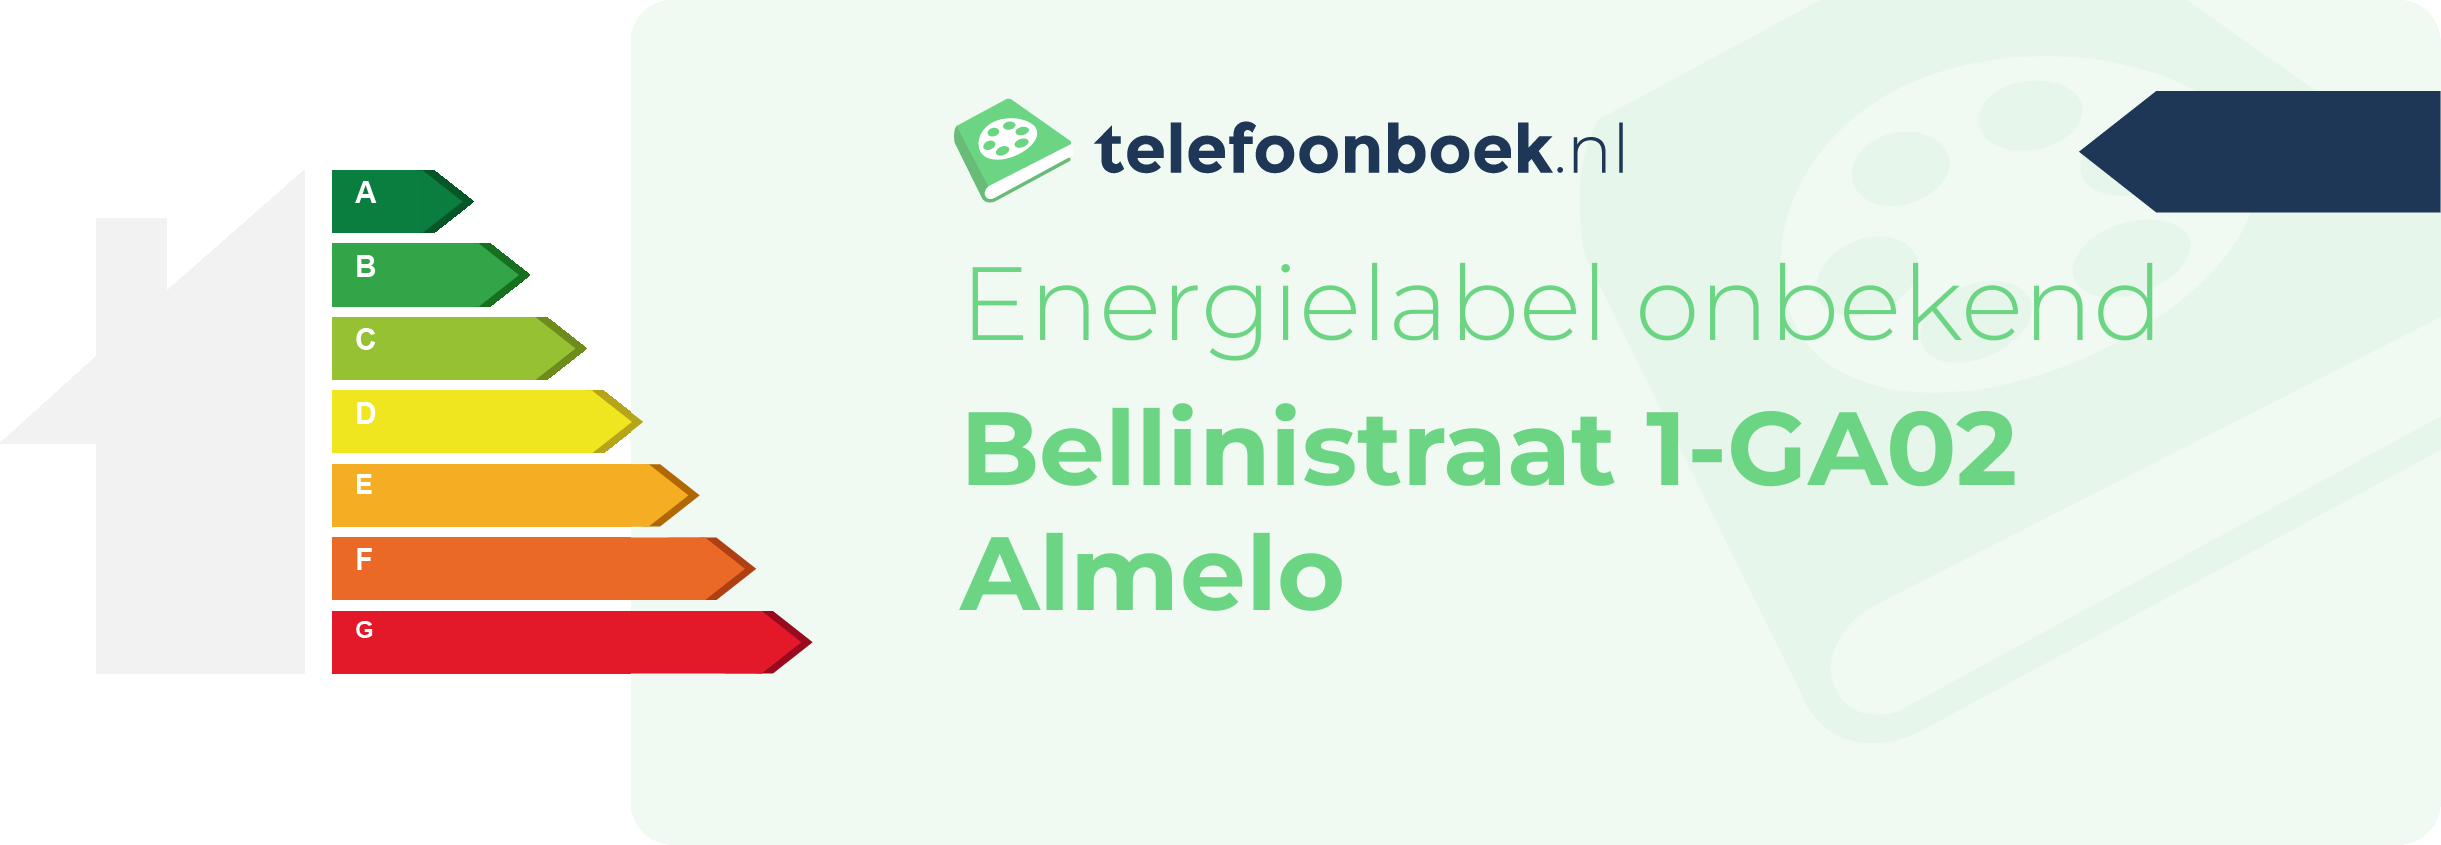 Energielabel Bellinistraat 1-GA02 Almelo